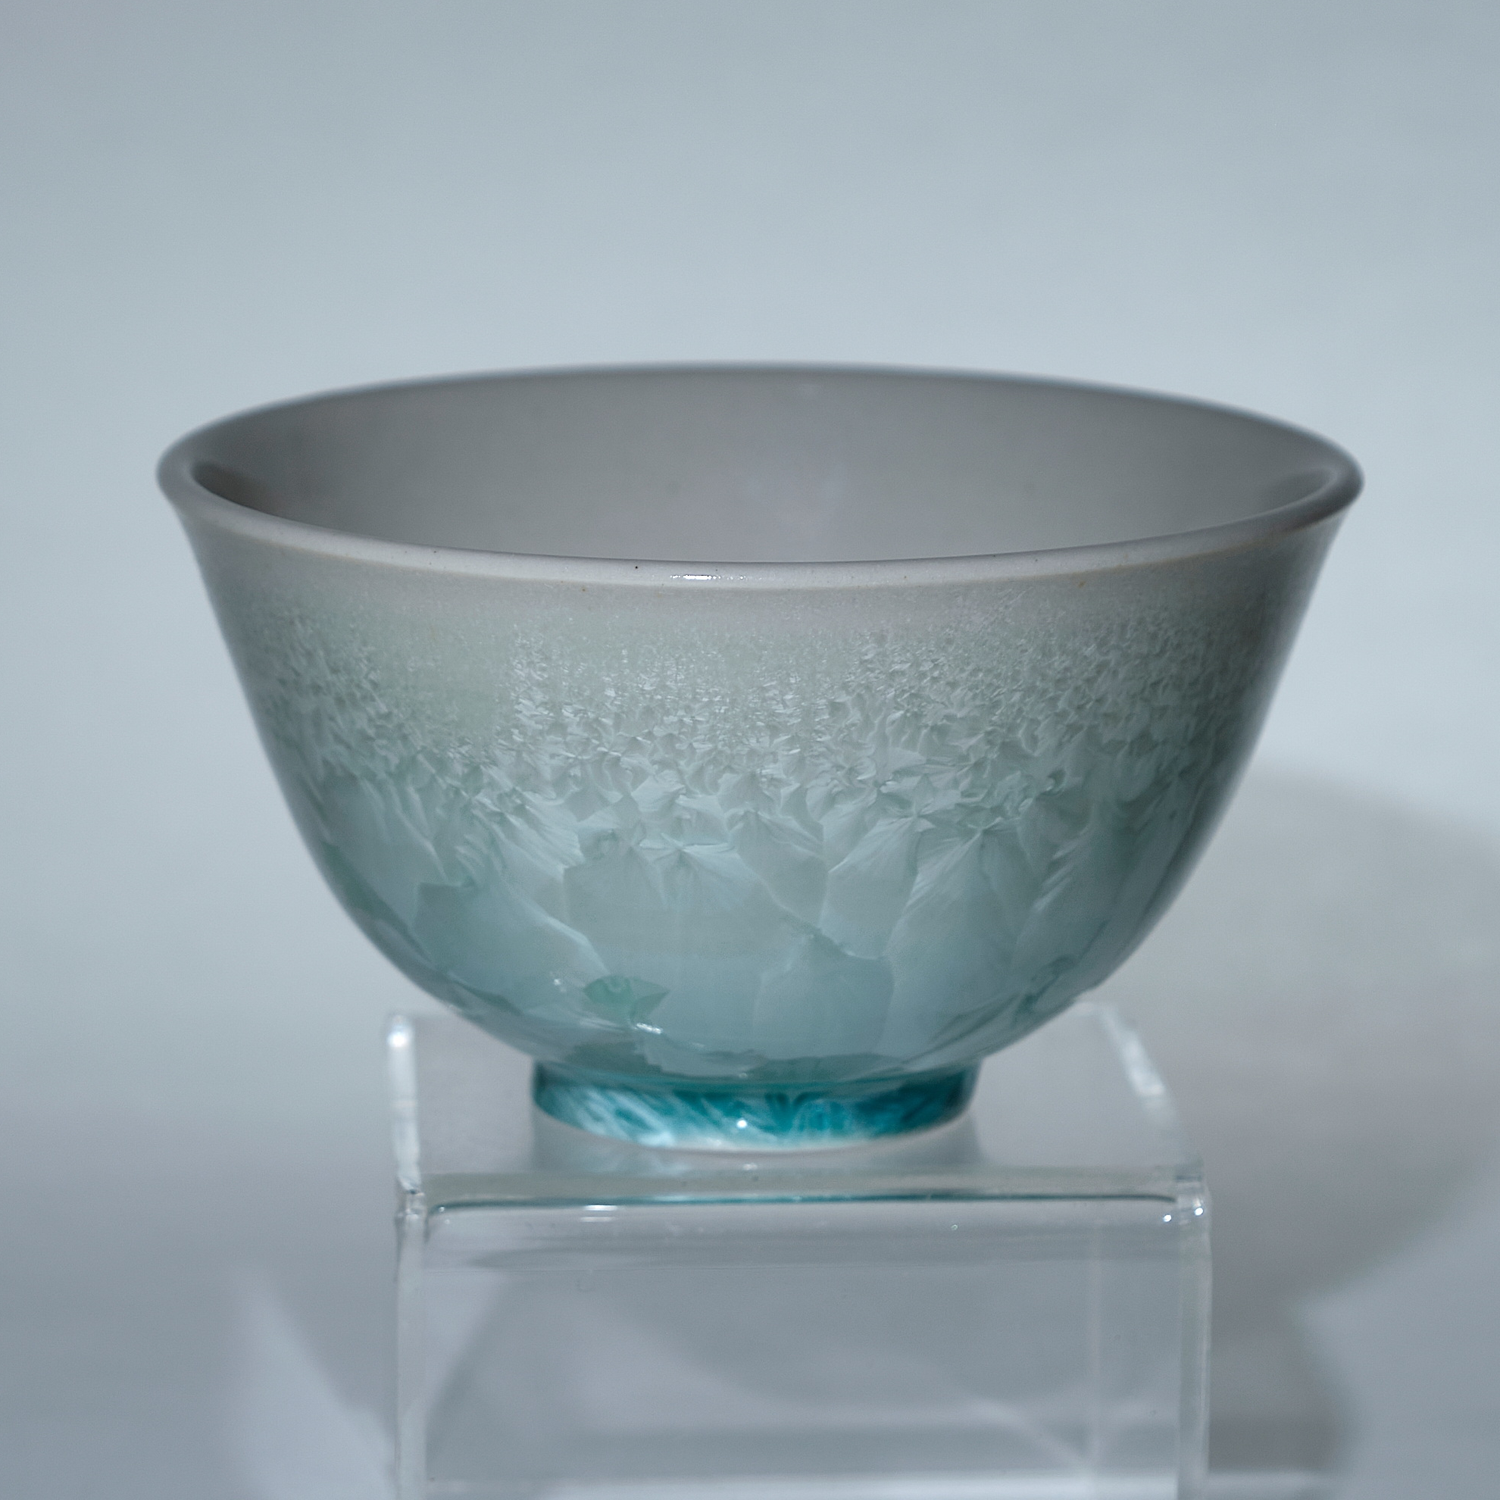 Yumiko Katsuya: Light Turquoise Chawan Product Image 1 of 1